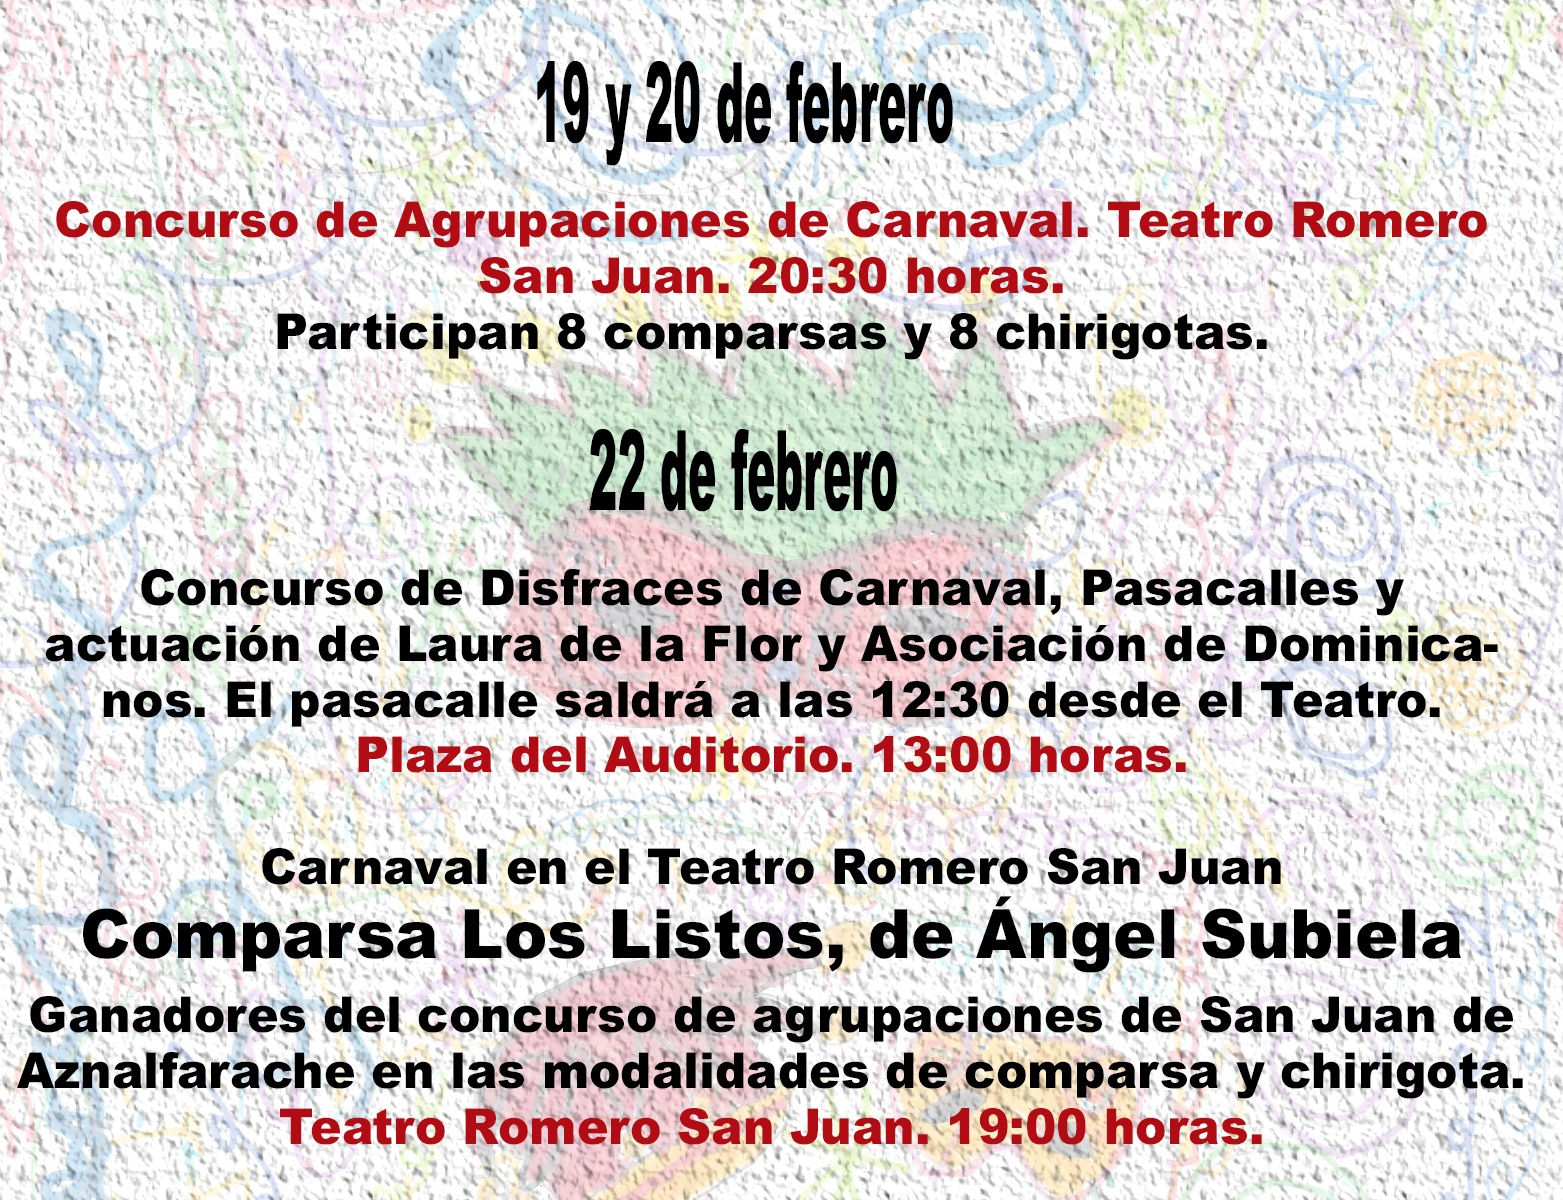 cartel programación carnaval